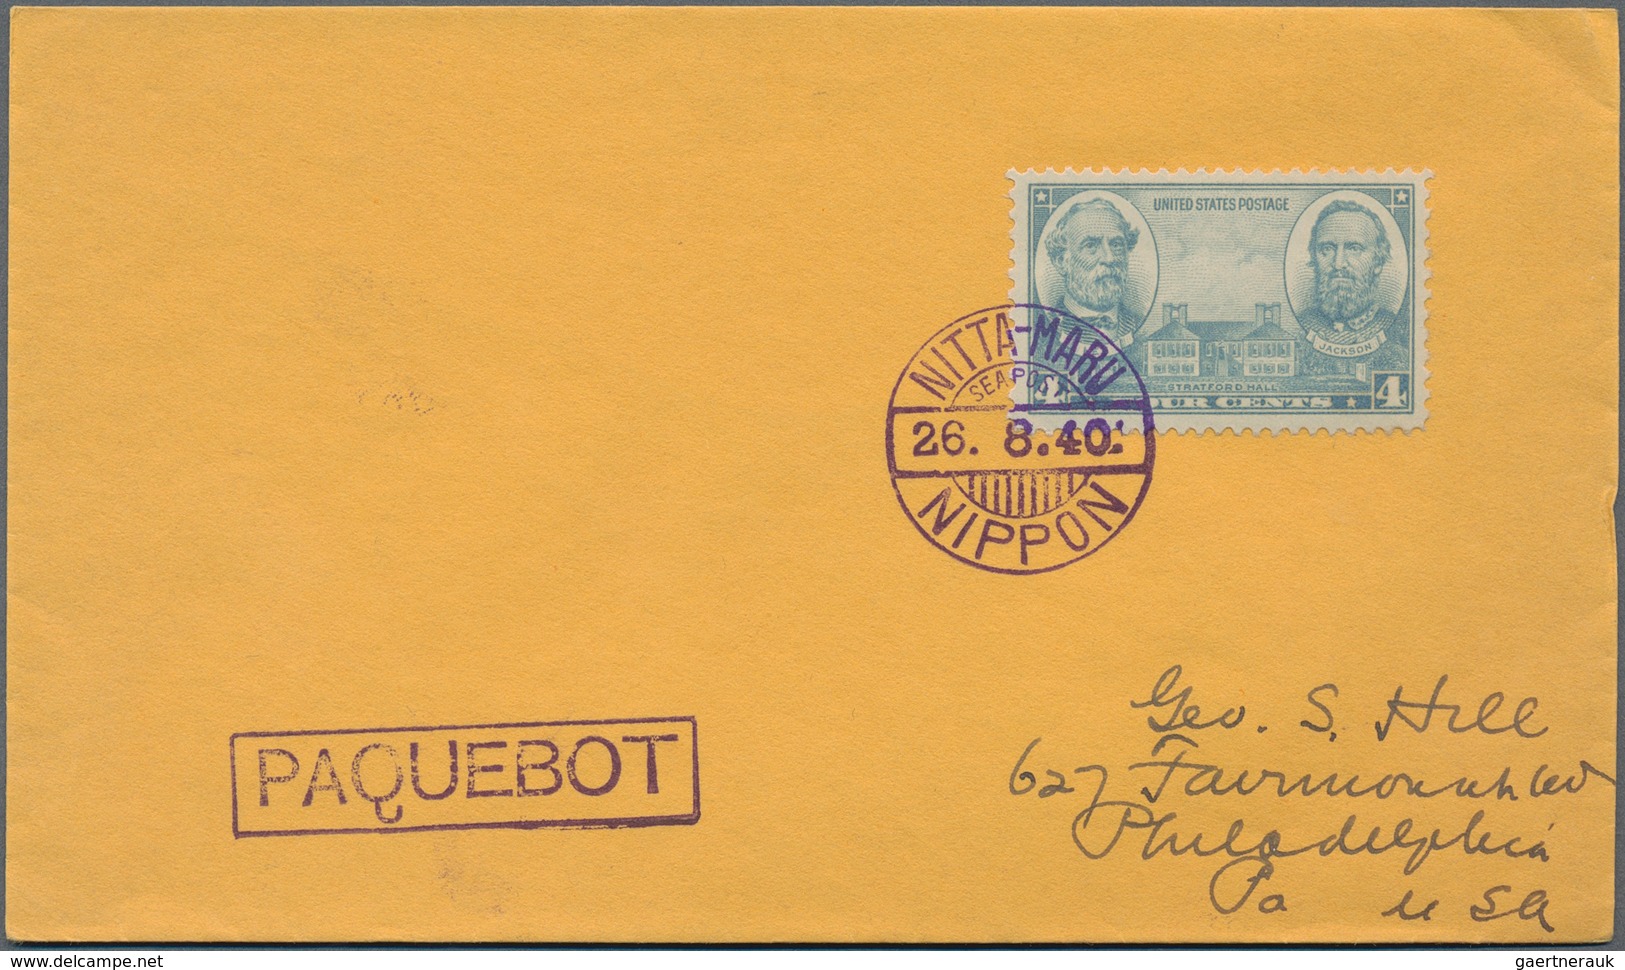 Japan: 1930/41, NYK-paquebot mail to USA inc. Kamakura-, Tatsuta- (2), Heian- (2), Asama- (2), Nitta